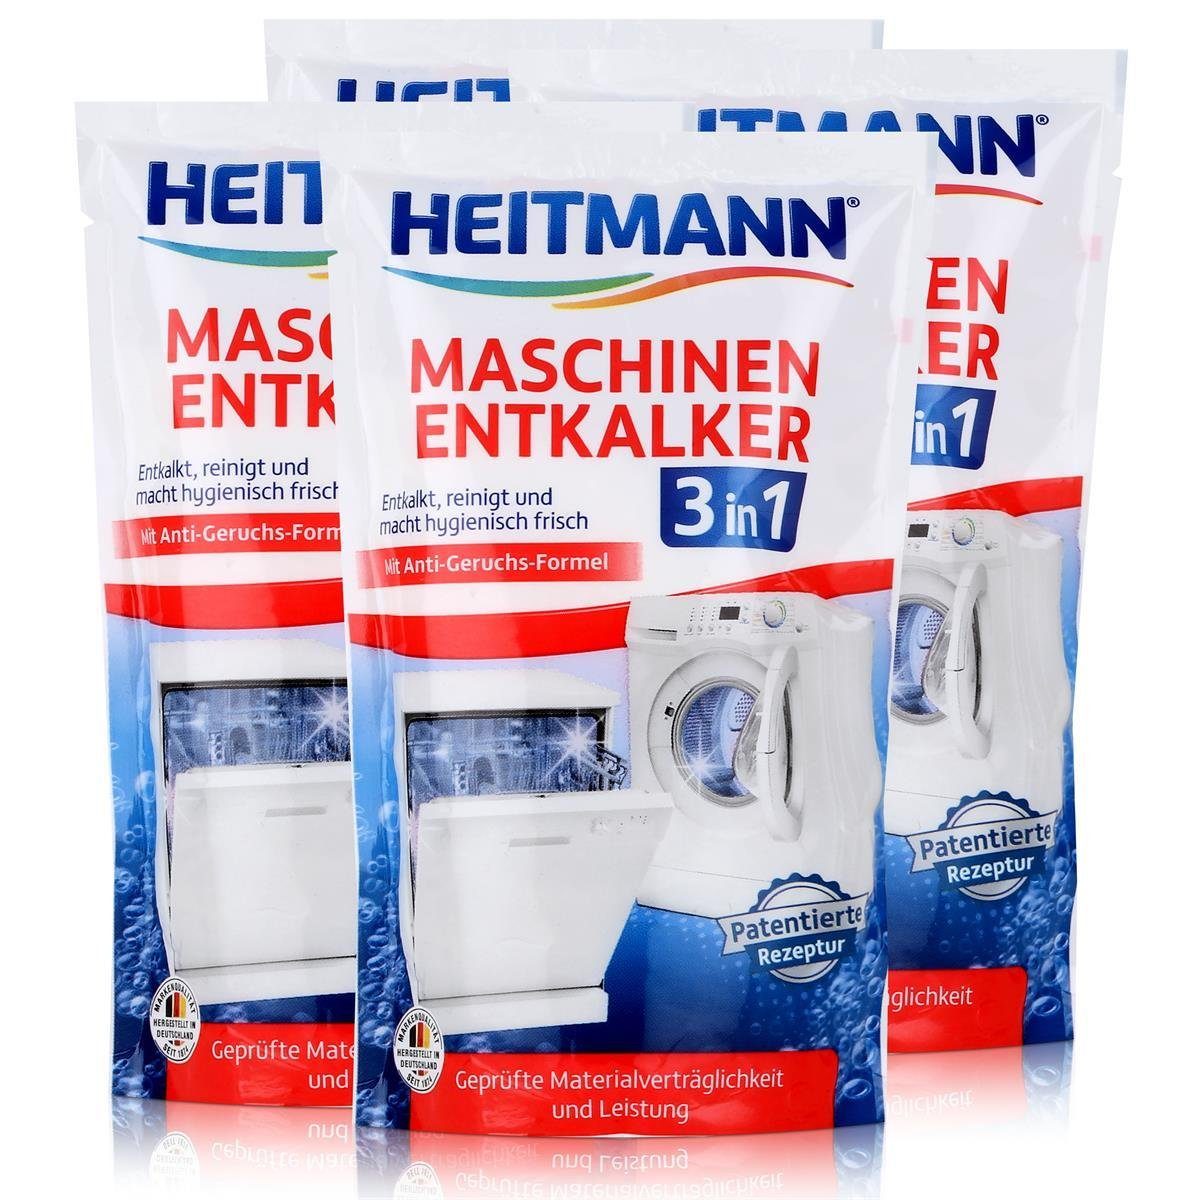 und HEITMANN Maschinen Spezialwaschmittel Heitmann Geschirrspüler - Entkalker 175g Waschmaschinen